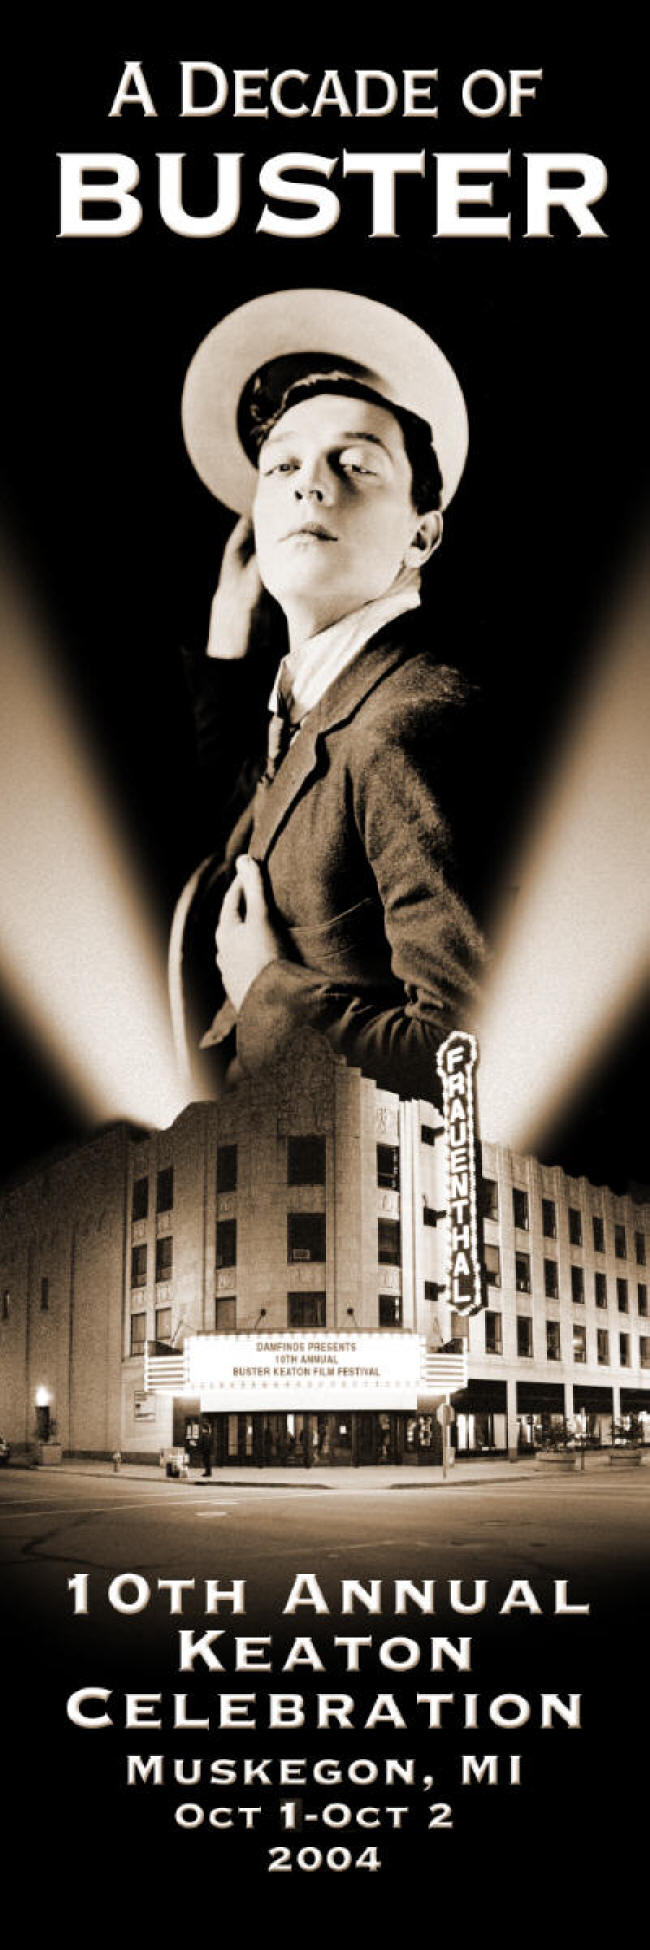 10th Annual Buster Keaton Celebration - Muskegon MI